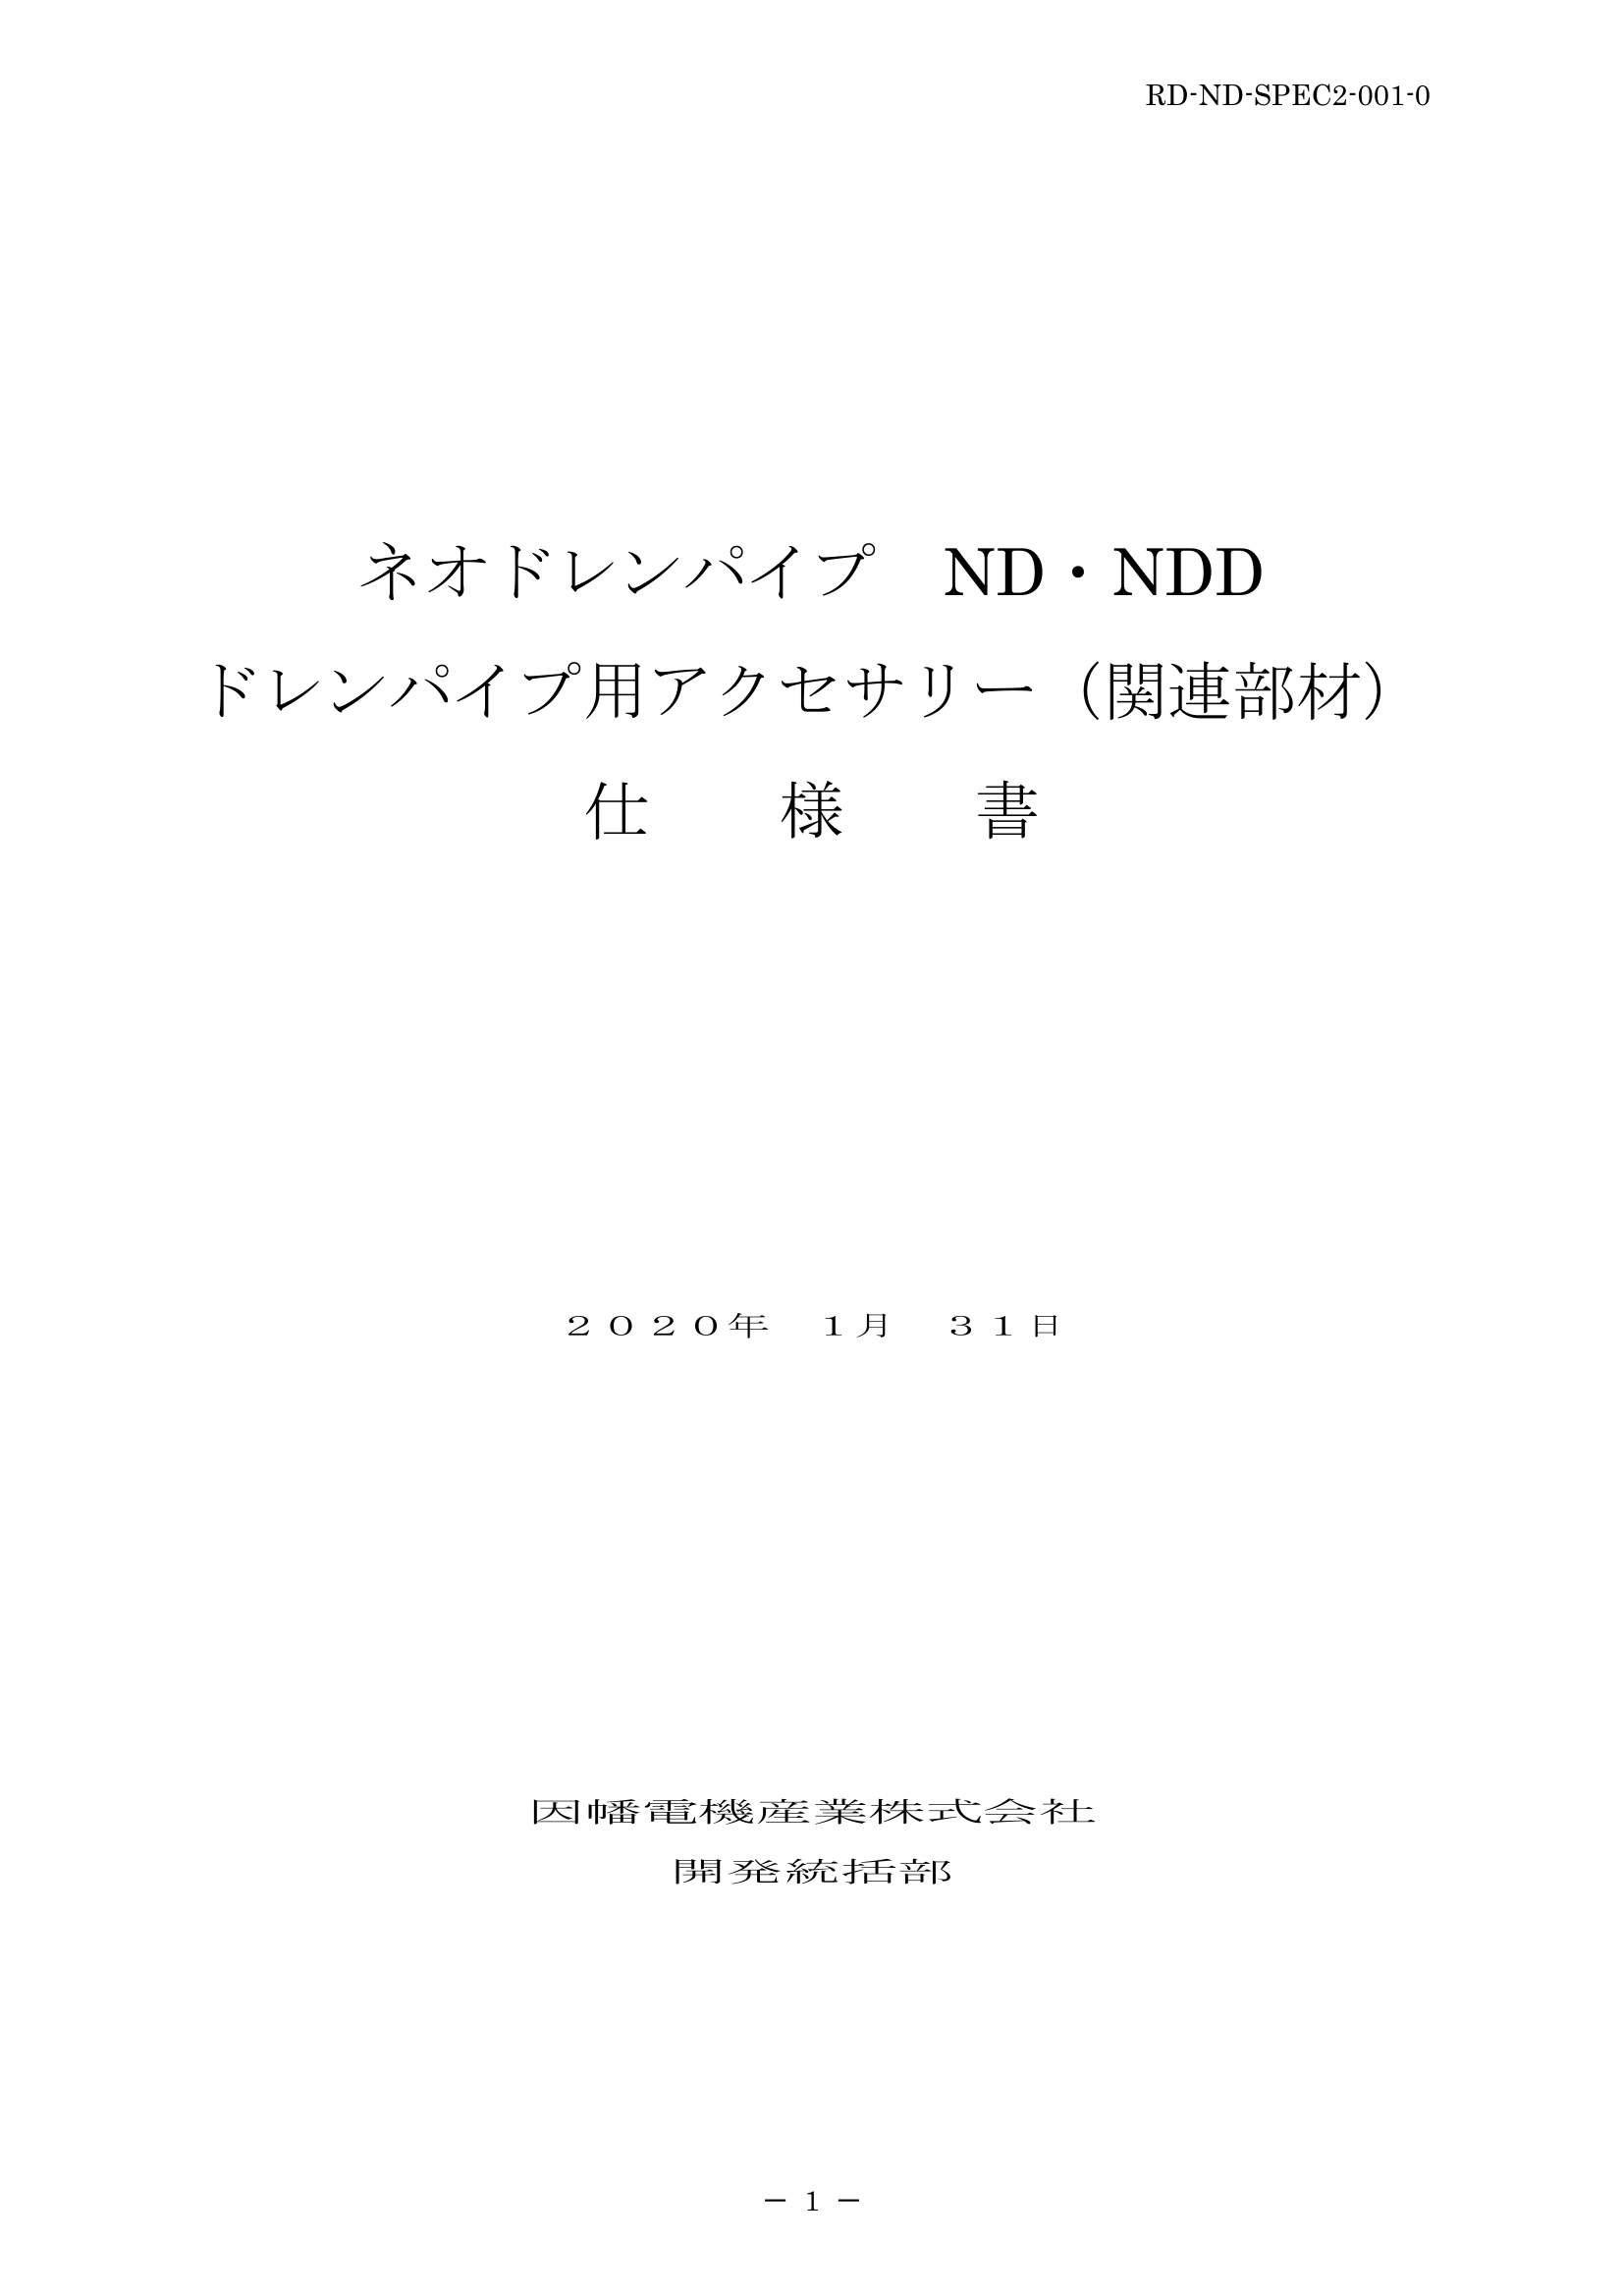 ND_NDD_仕様書_20200131.pdf